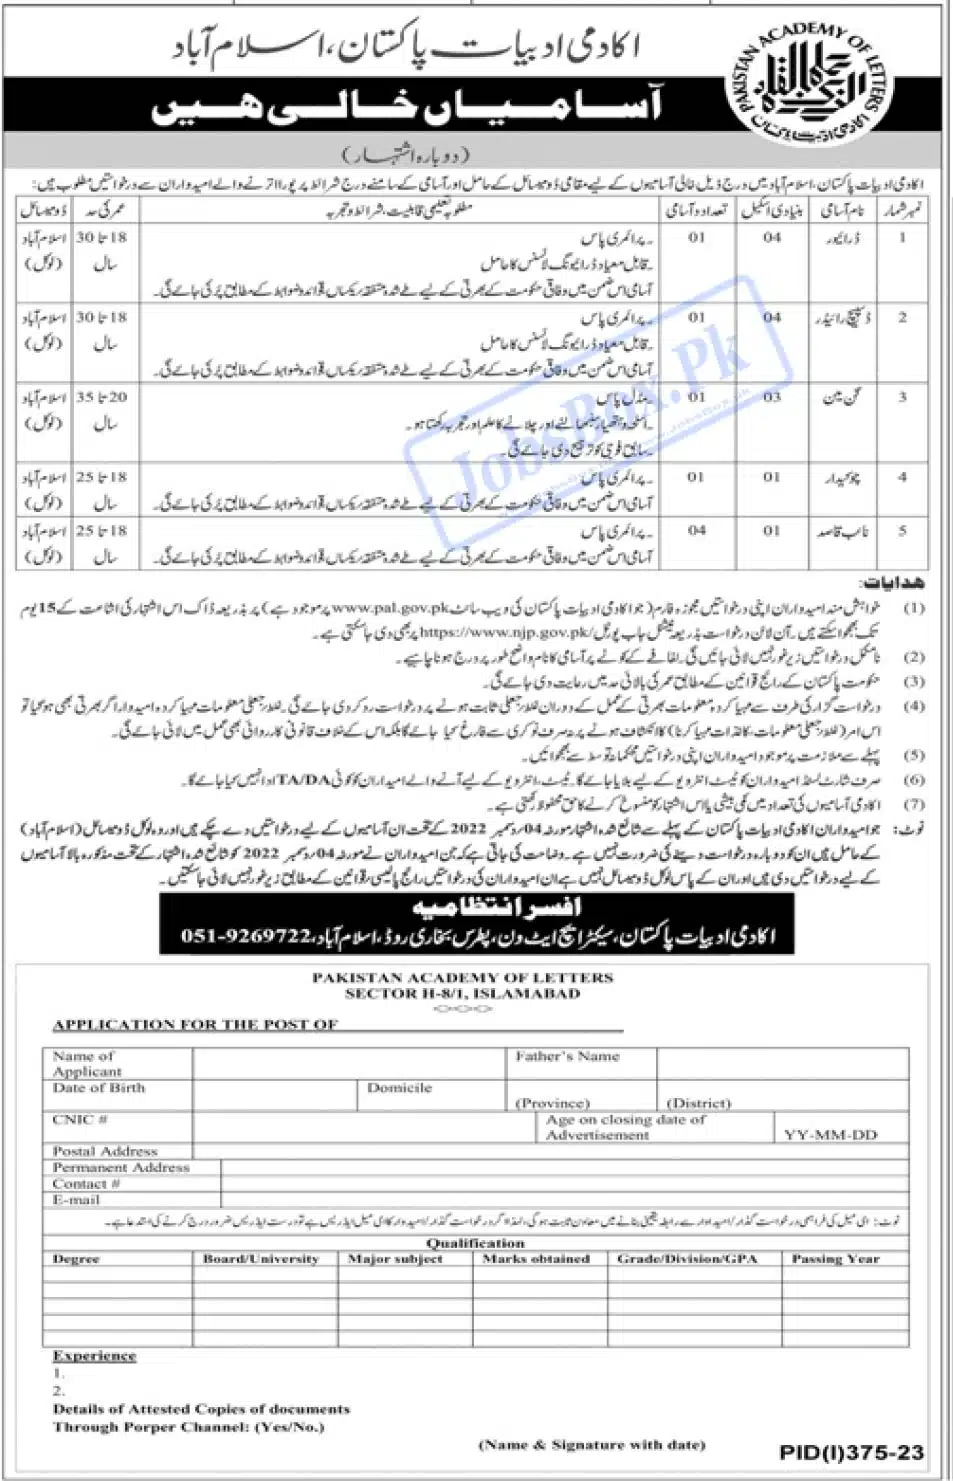 Pakistan Academy of Letters PAL jobs 2023 – Download Form via www.pal.gov.pk